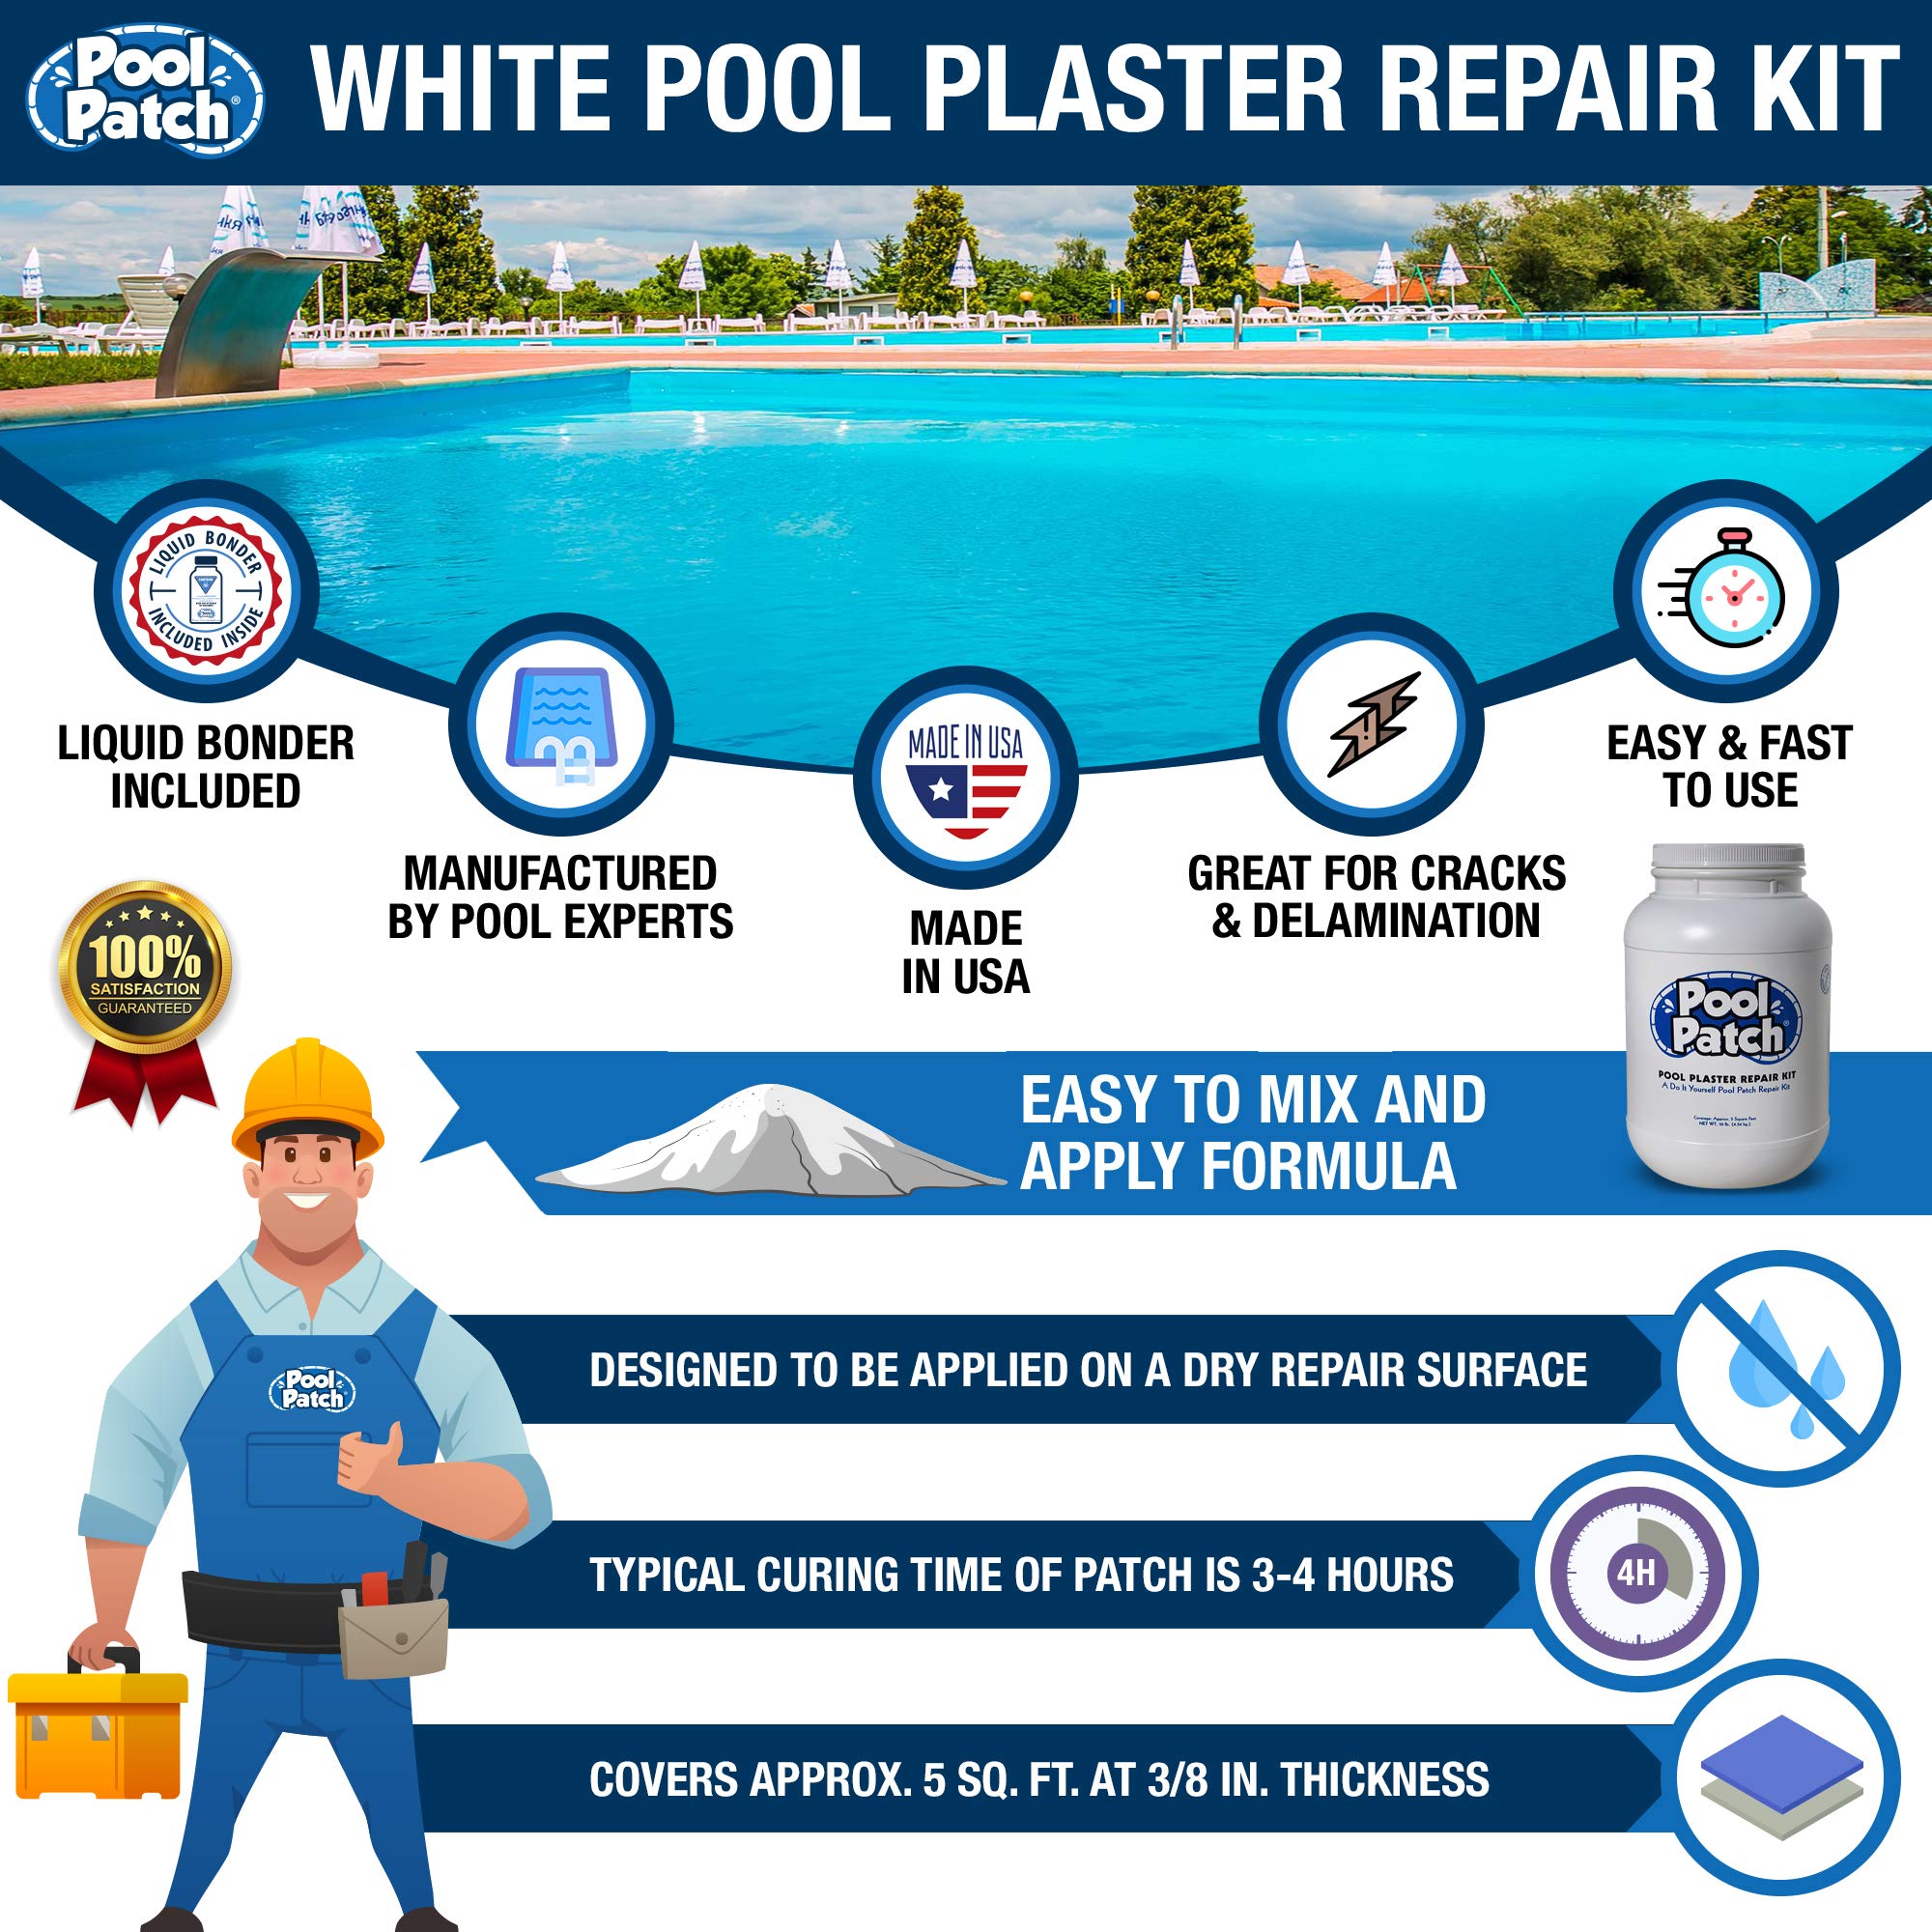 Pool Patch White Pool Plaster Repair Kit, 10-Pound, White